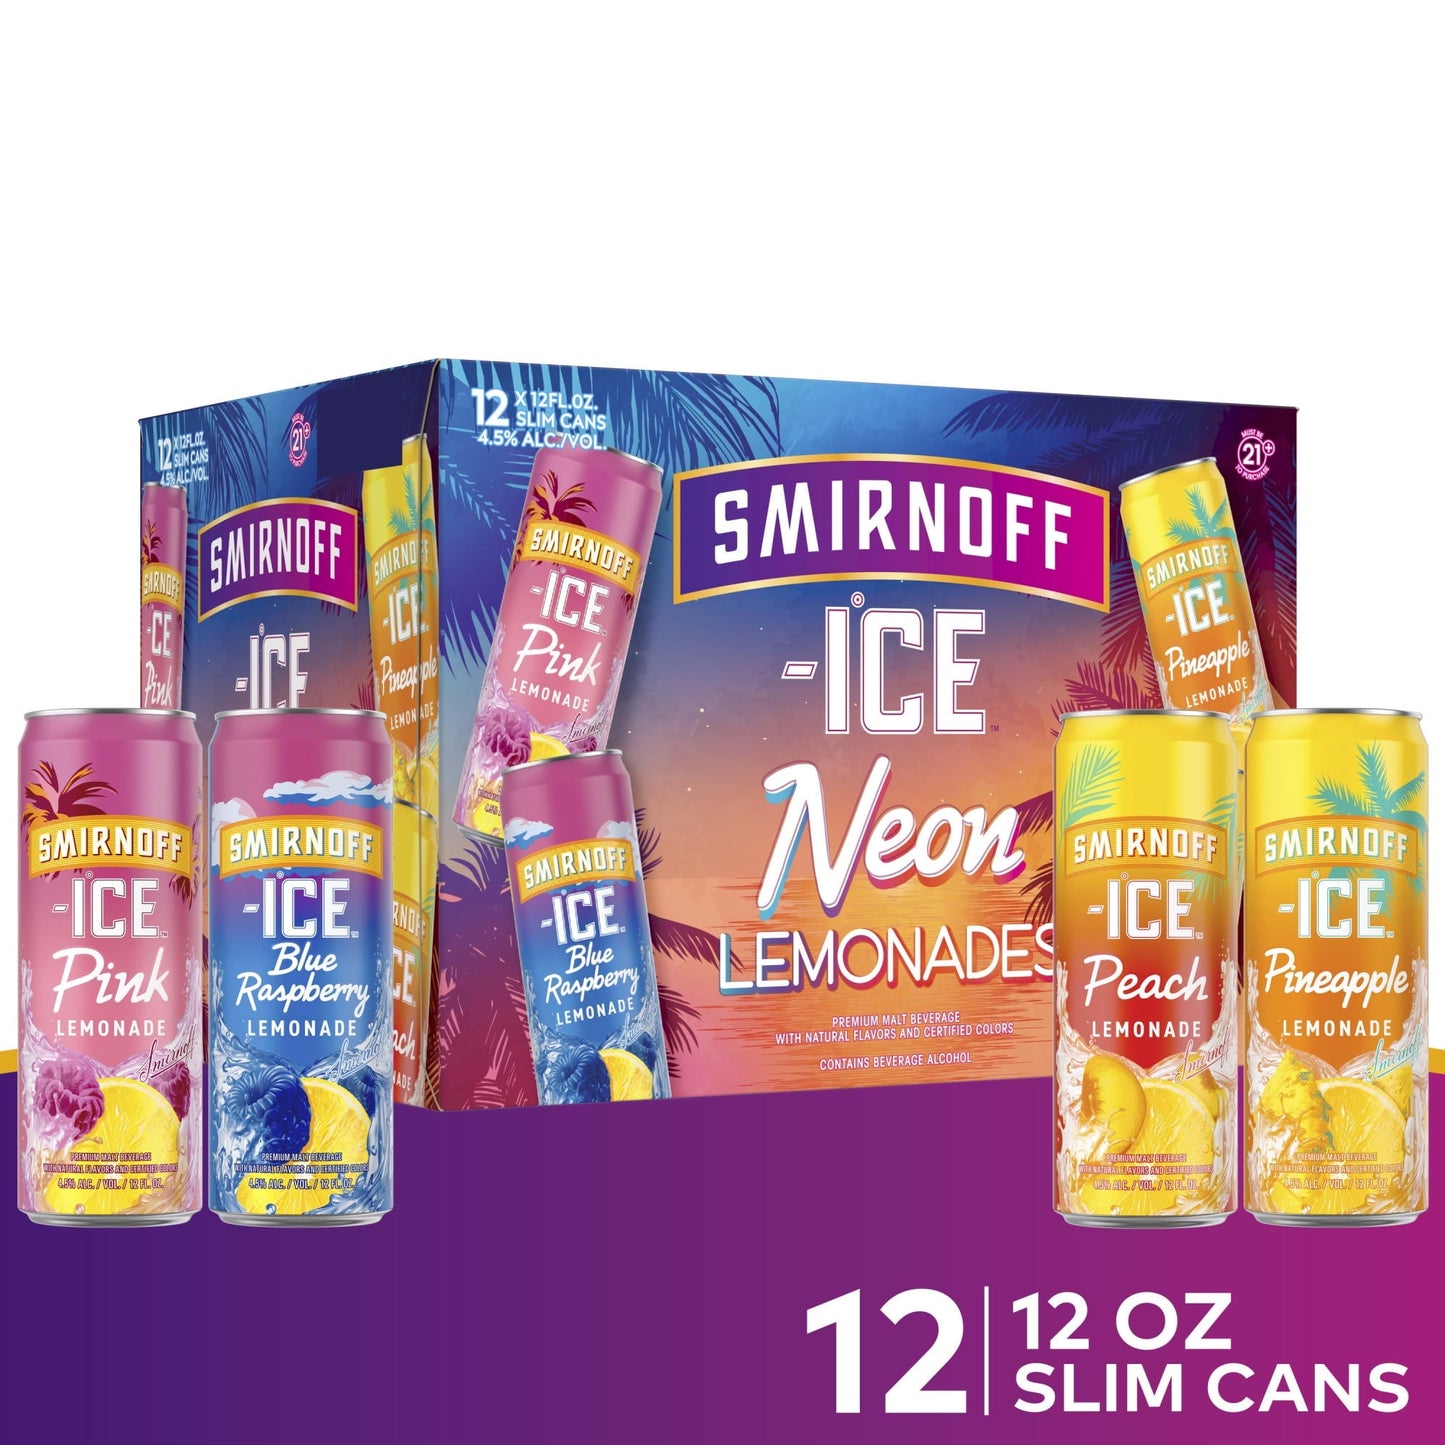 Smirnoff Ice Neon Lemonade Variety Pack, 12oz Cans, 12pk